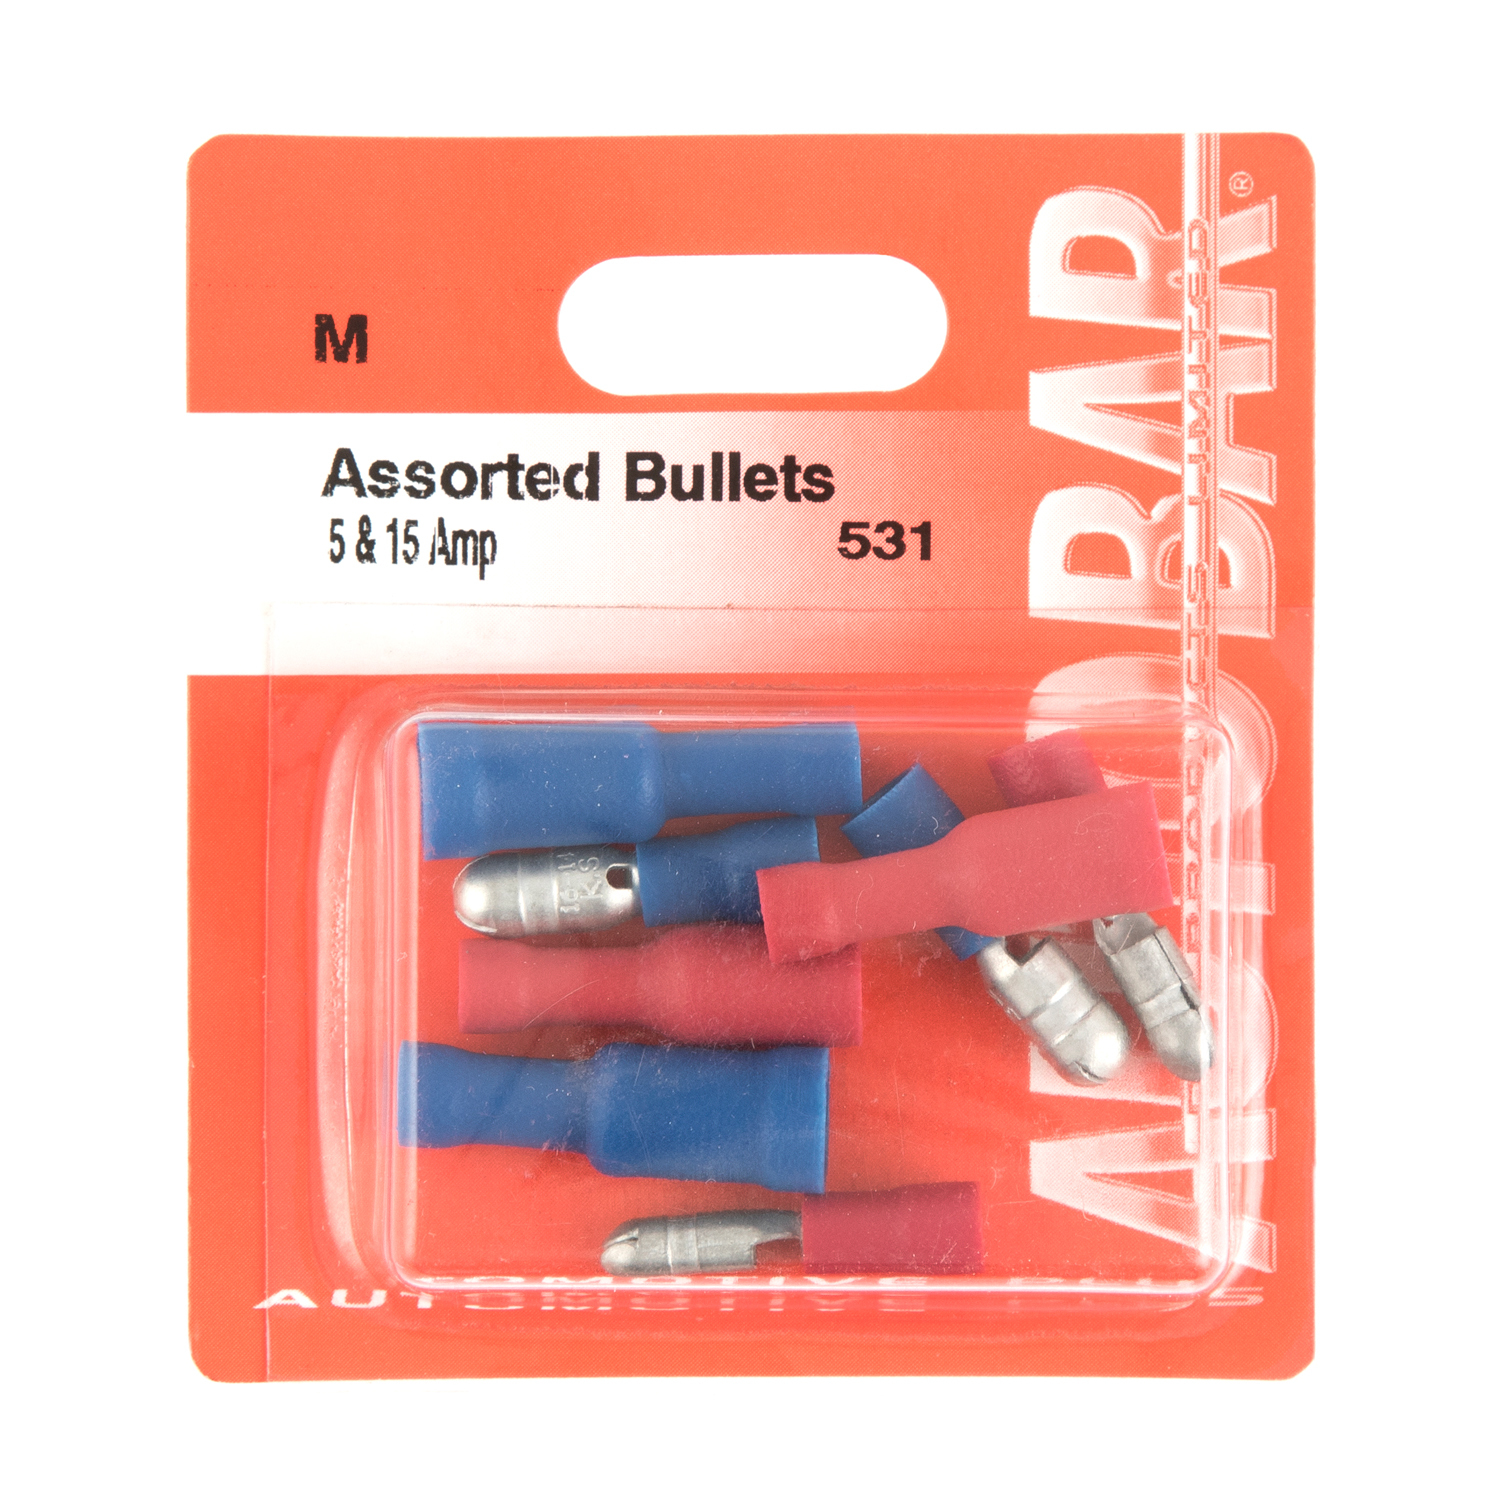 Autobar Assorted Bullets Connectors Image